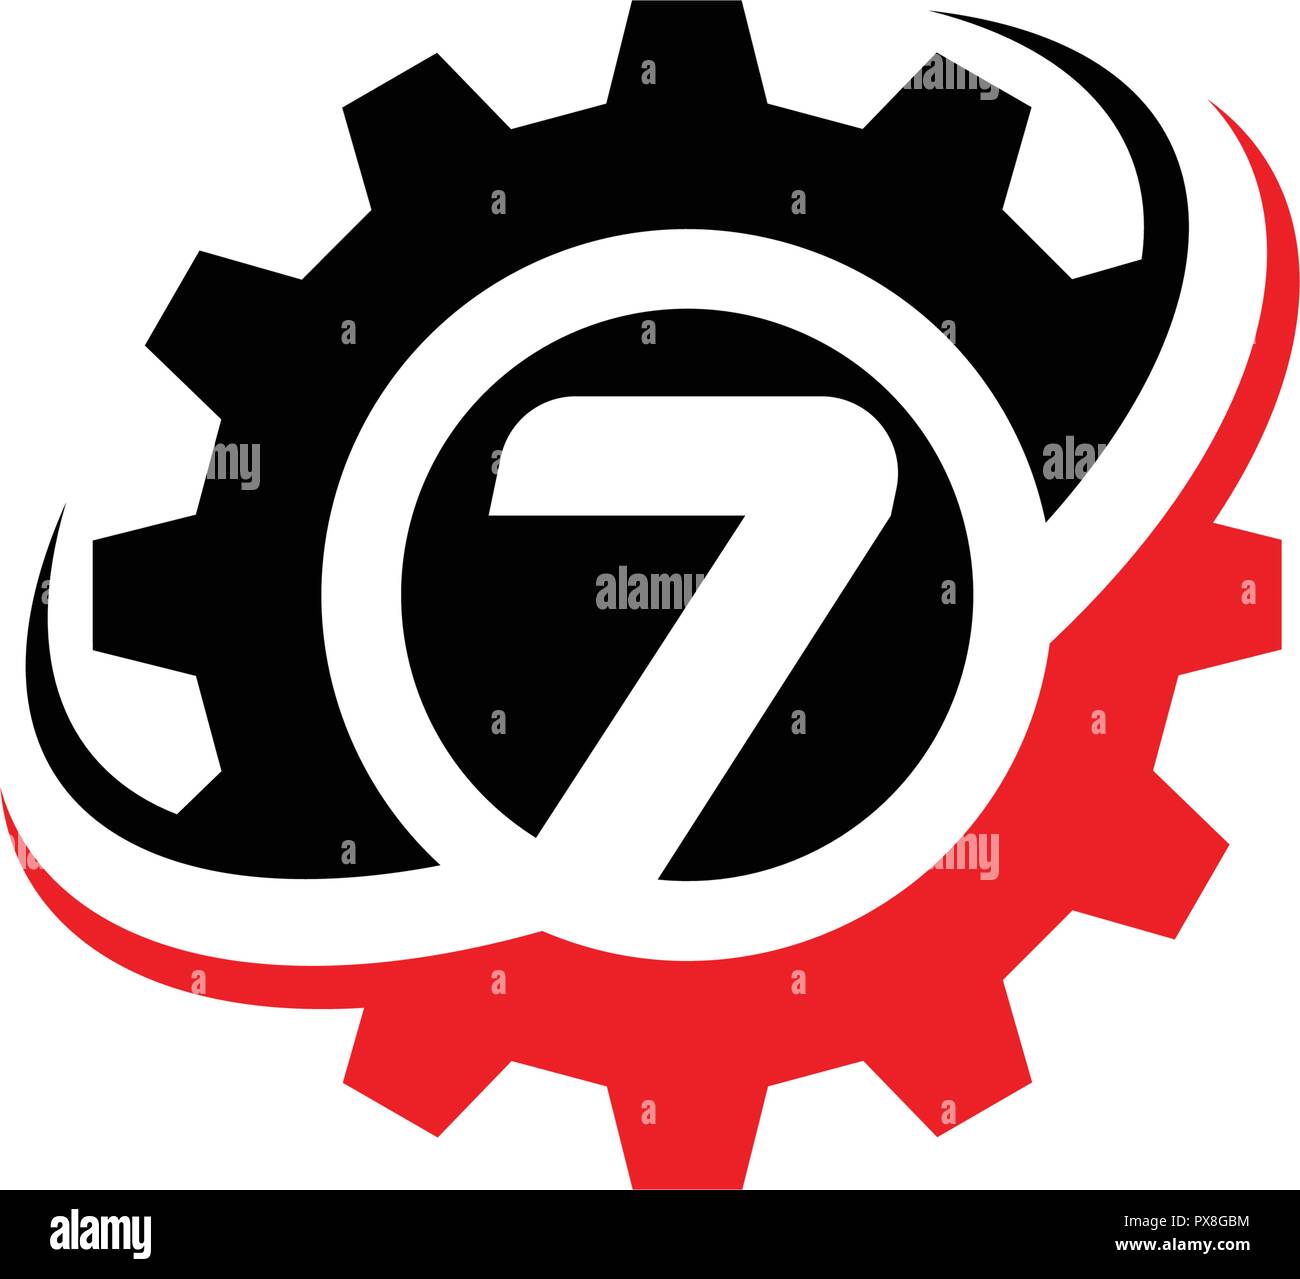 Number 7 Gear Logo Design Template Stock Vector